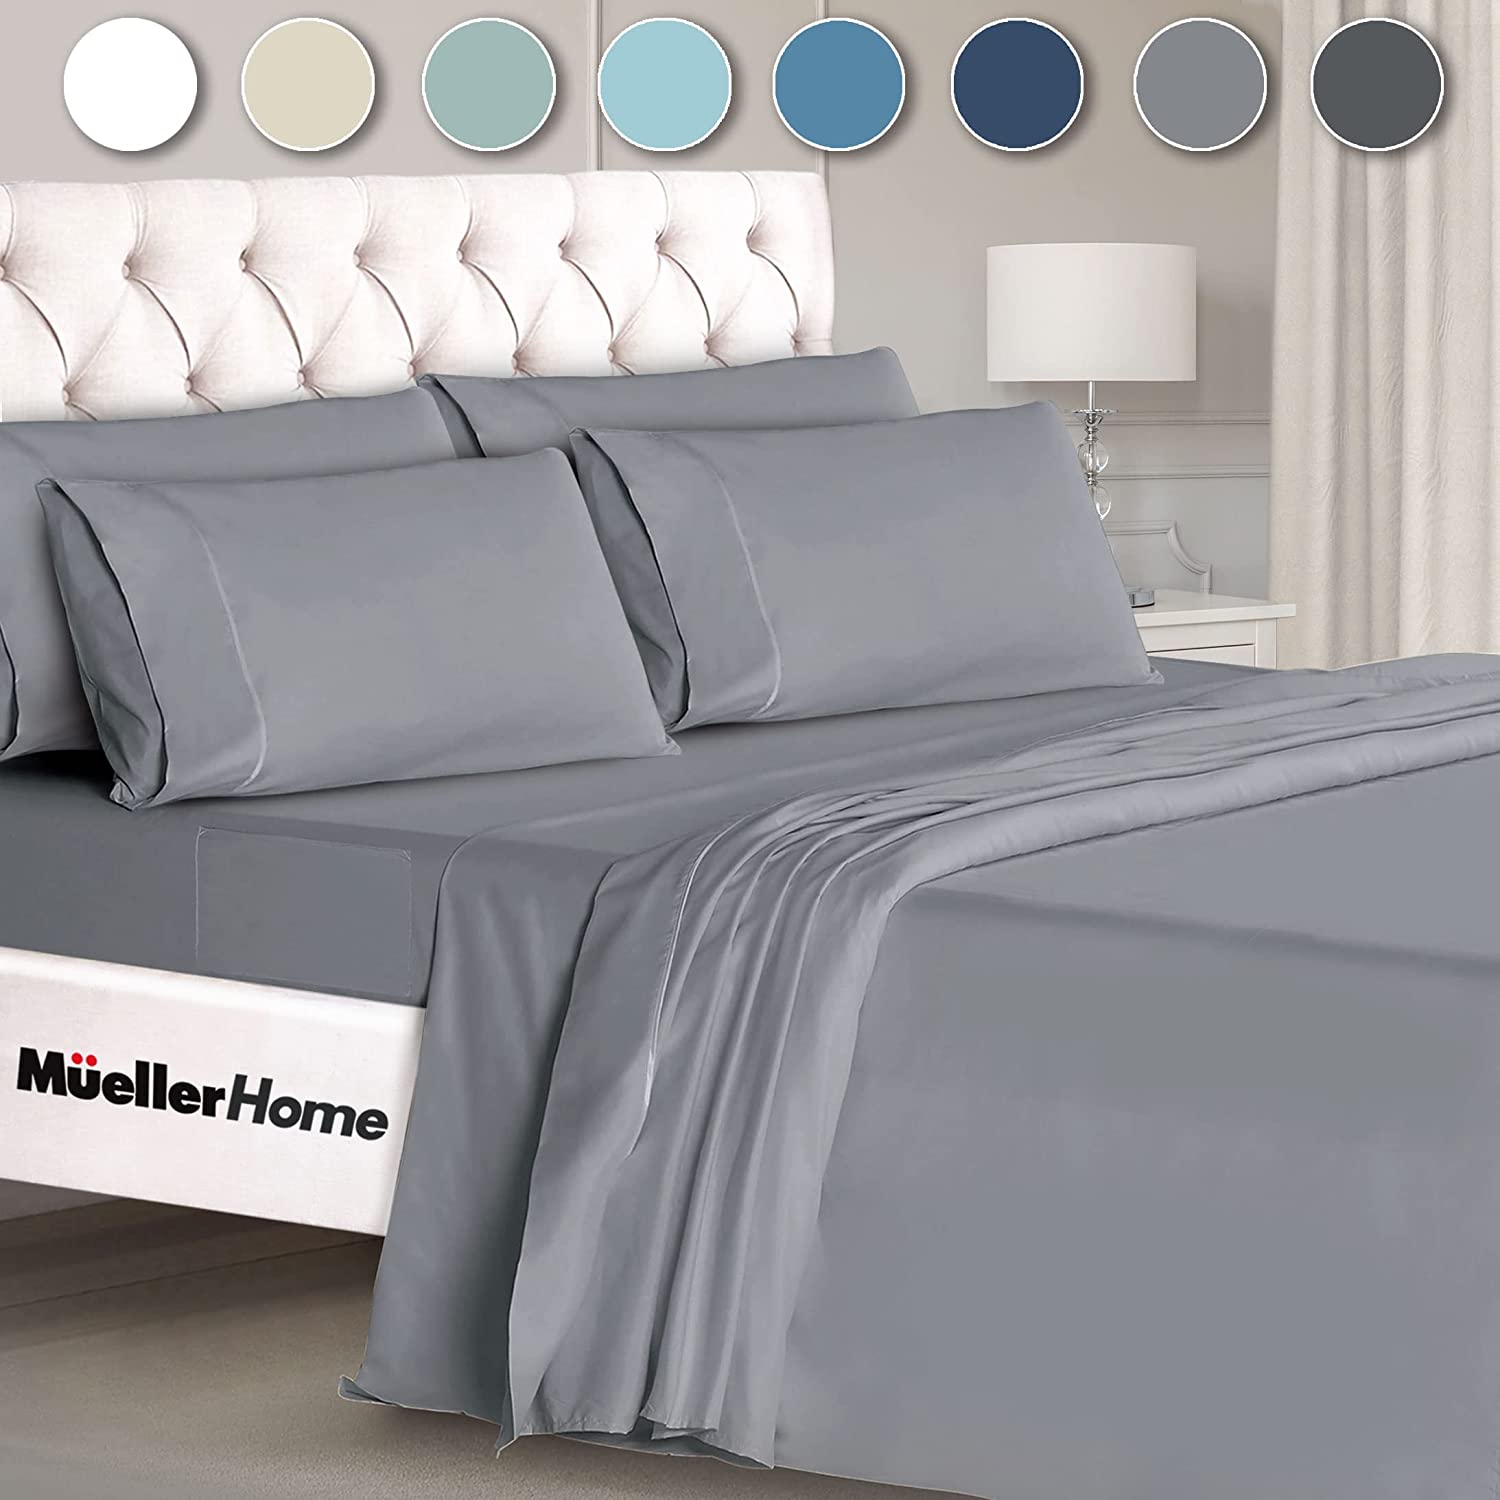 muellerhome_Premium-Hotel-Collection-6-Piece-QUEEN-Sheet-Set-Light-Gray